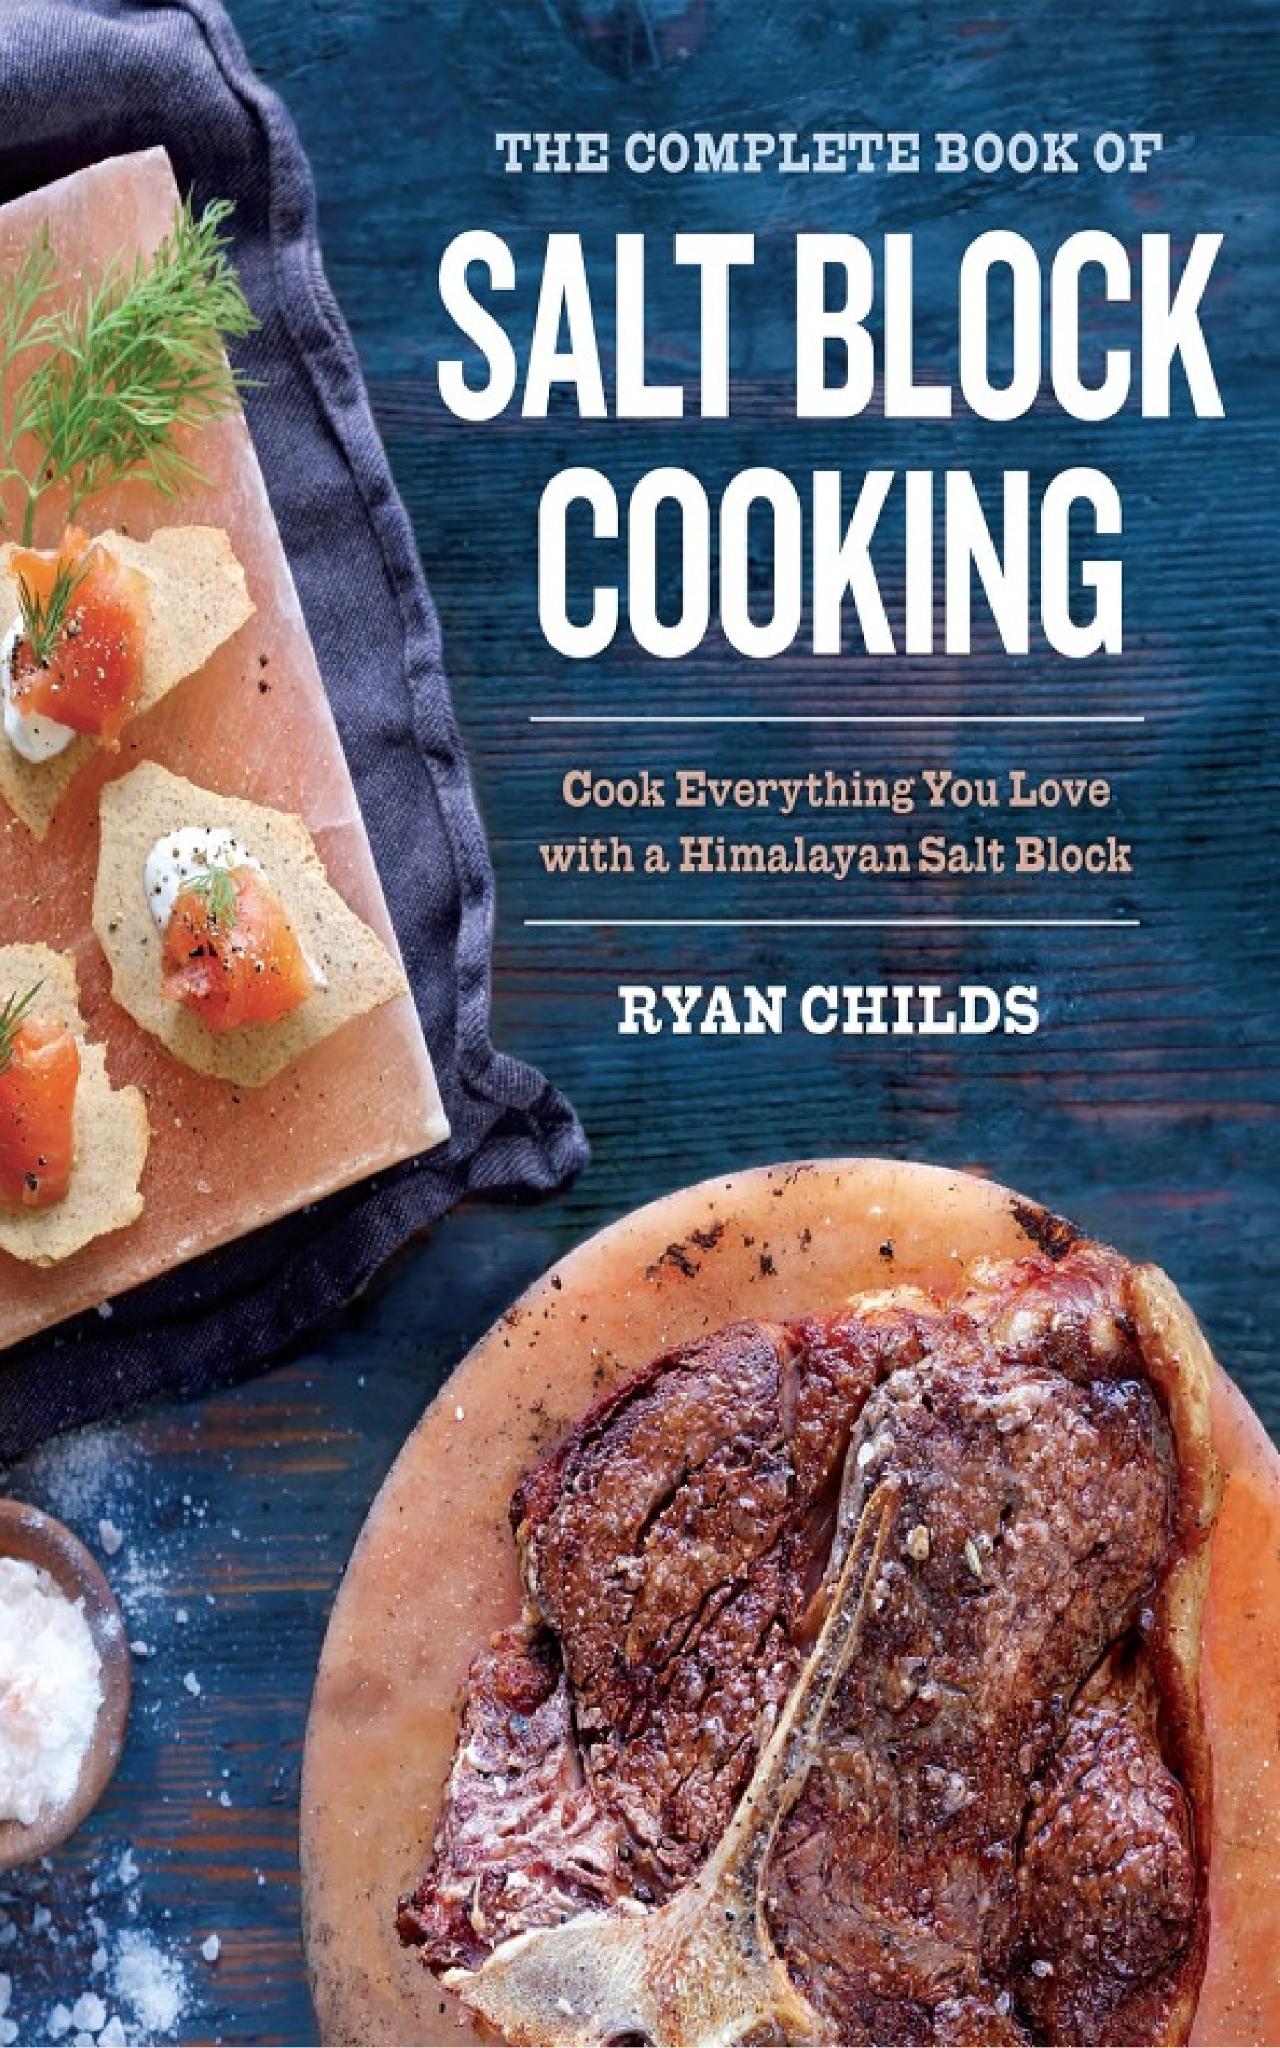 Salt Block Cooking by Ryan Childs